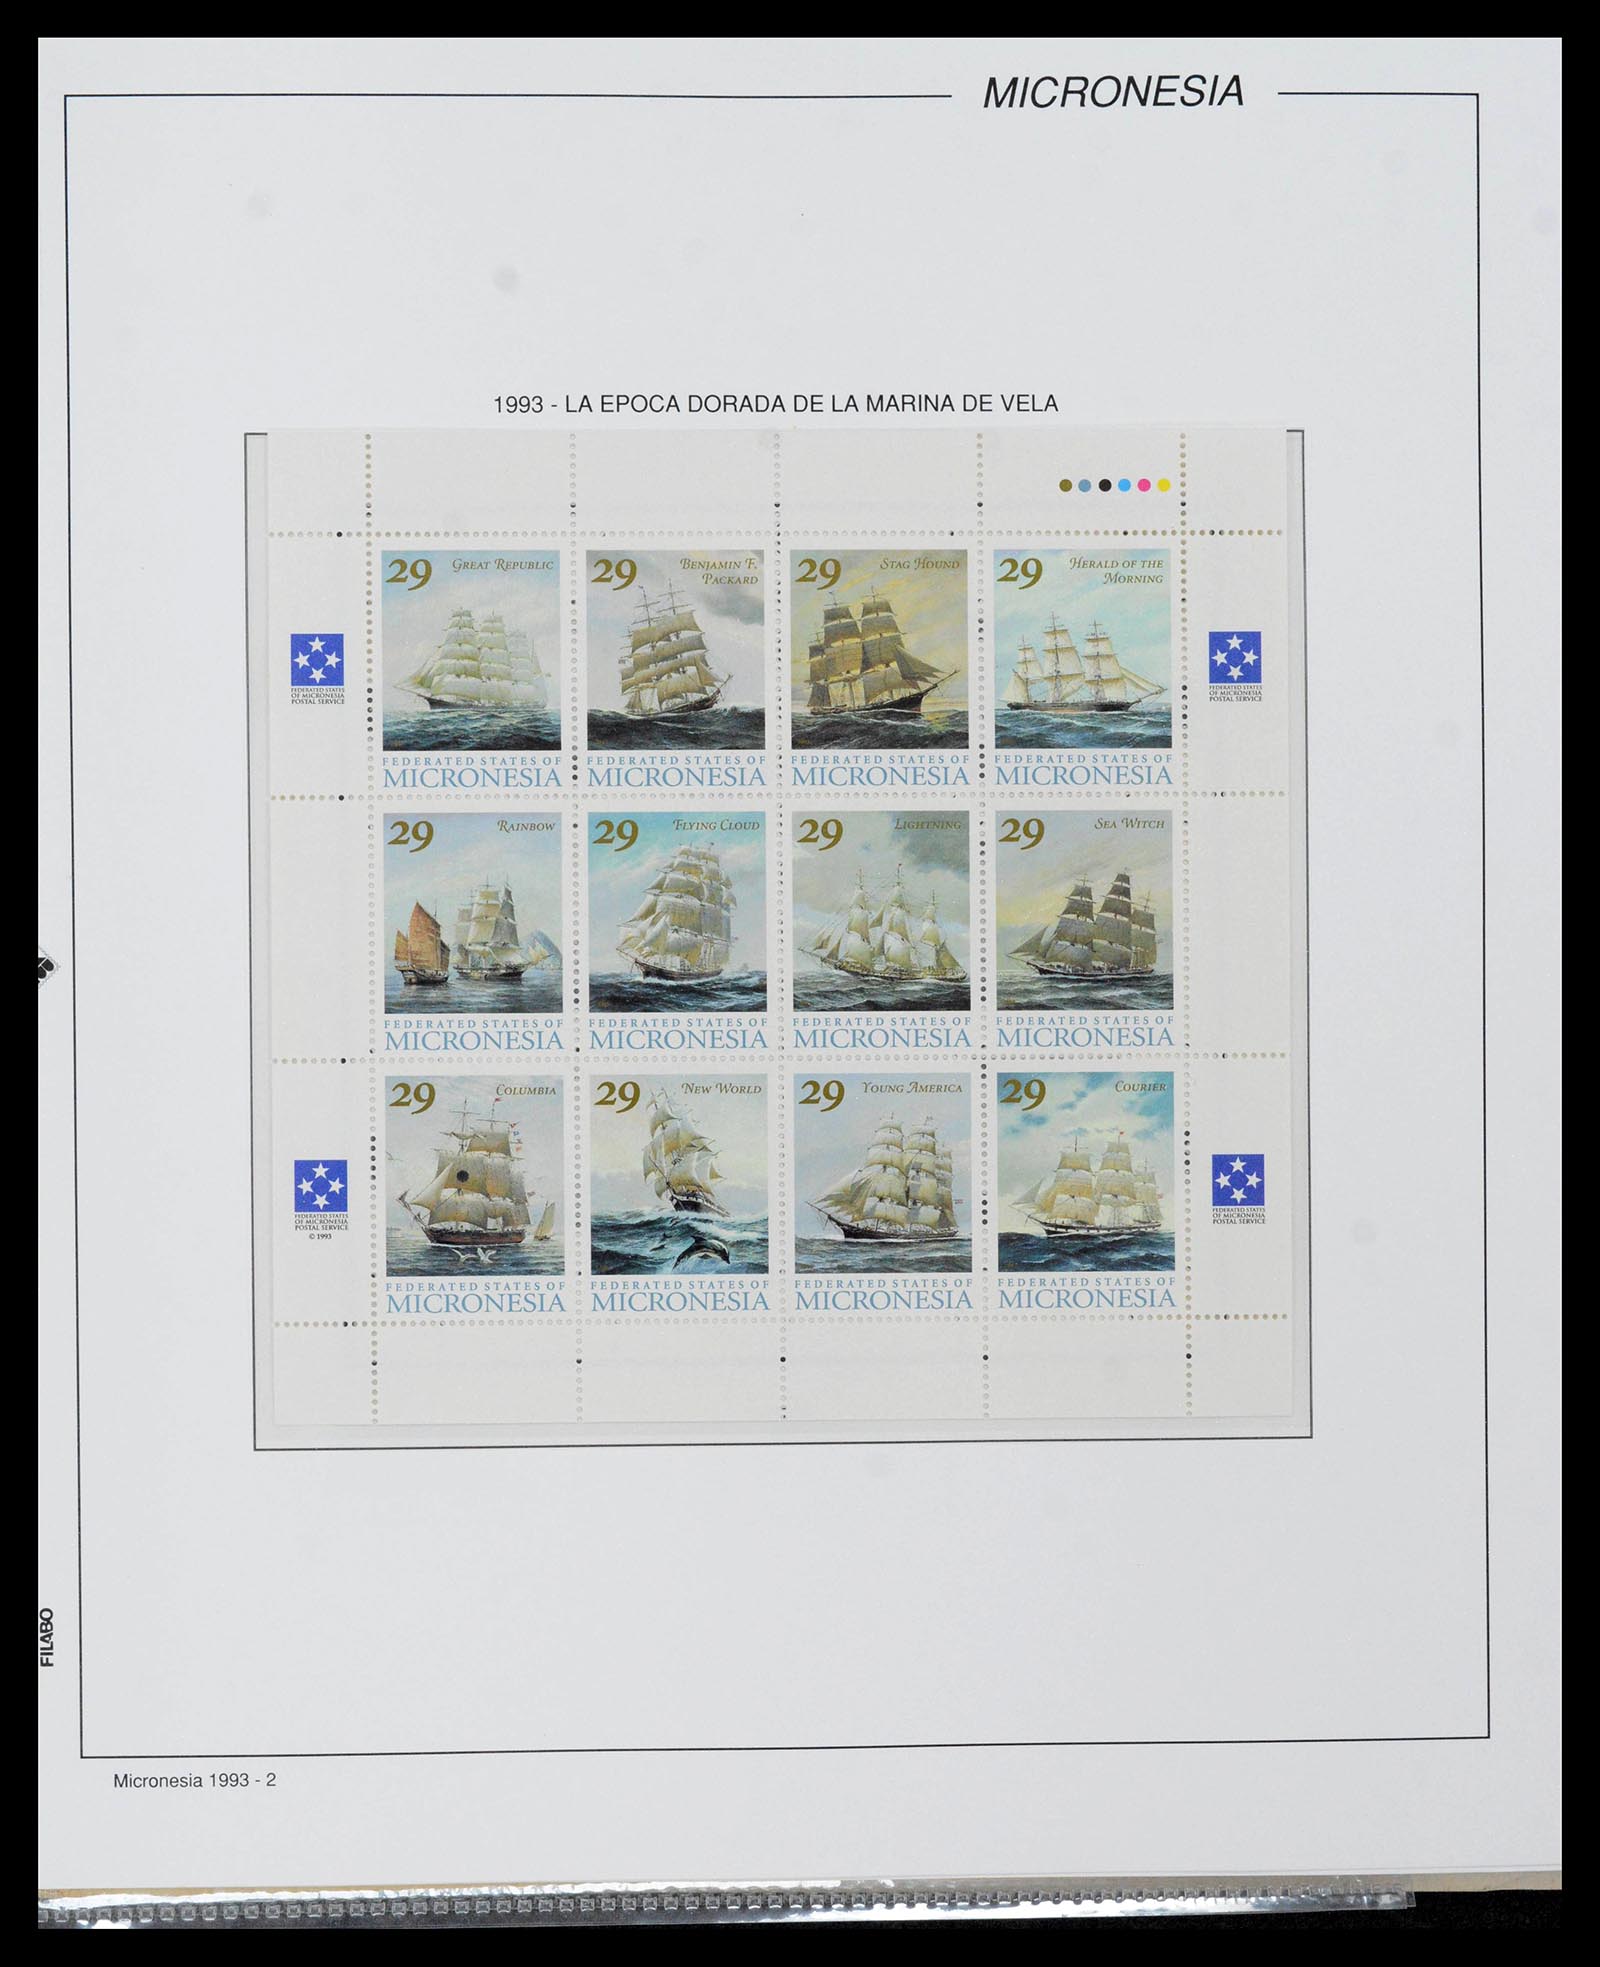 39222 0101 - Stamp collection 39222 Palau, Micronesia and Marshall islands 1980-1995.